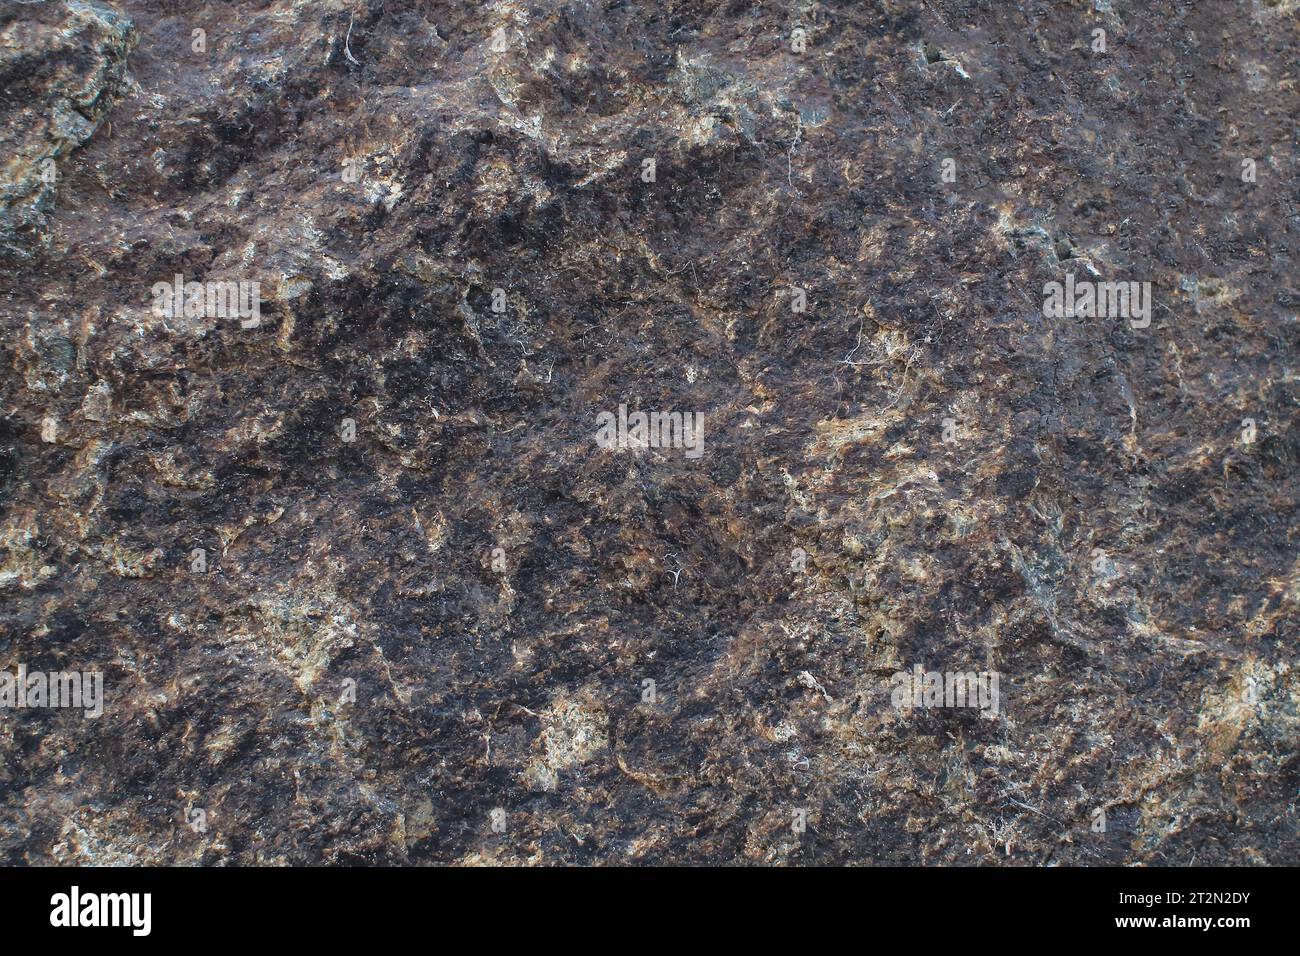 Abstract natural rock stone granite grunge rusty metal texture design background. natural color stone material granite design wallpaper. Stock Photo